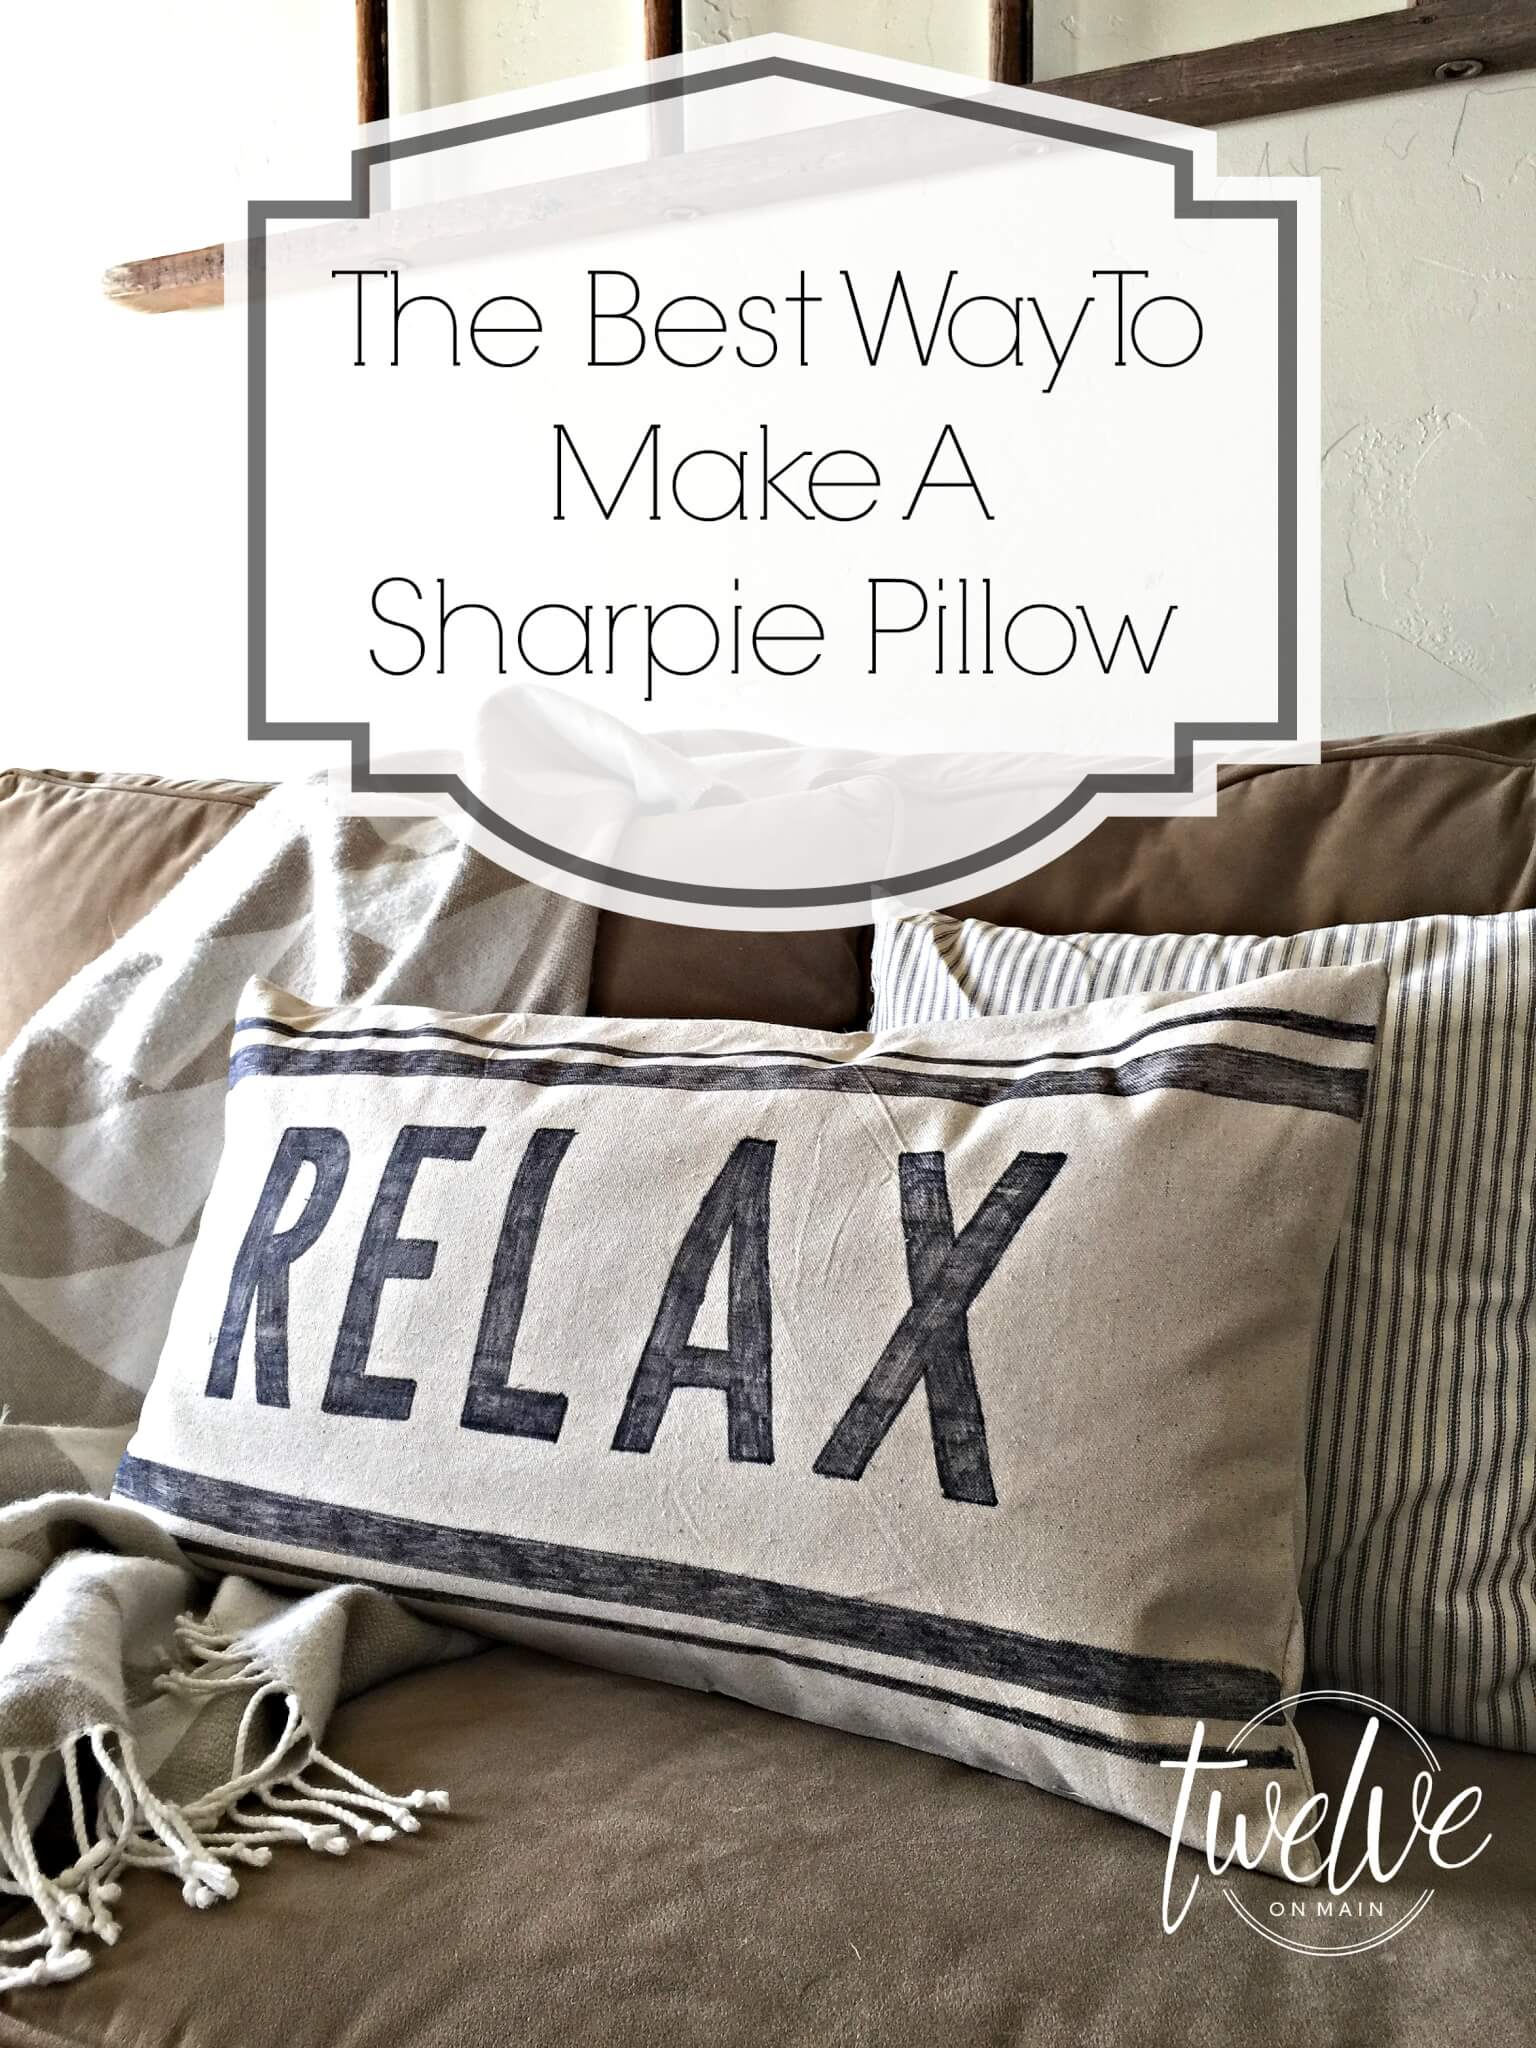 The best way to make a Sharpie pillow | twelveonmain.com